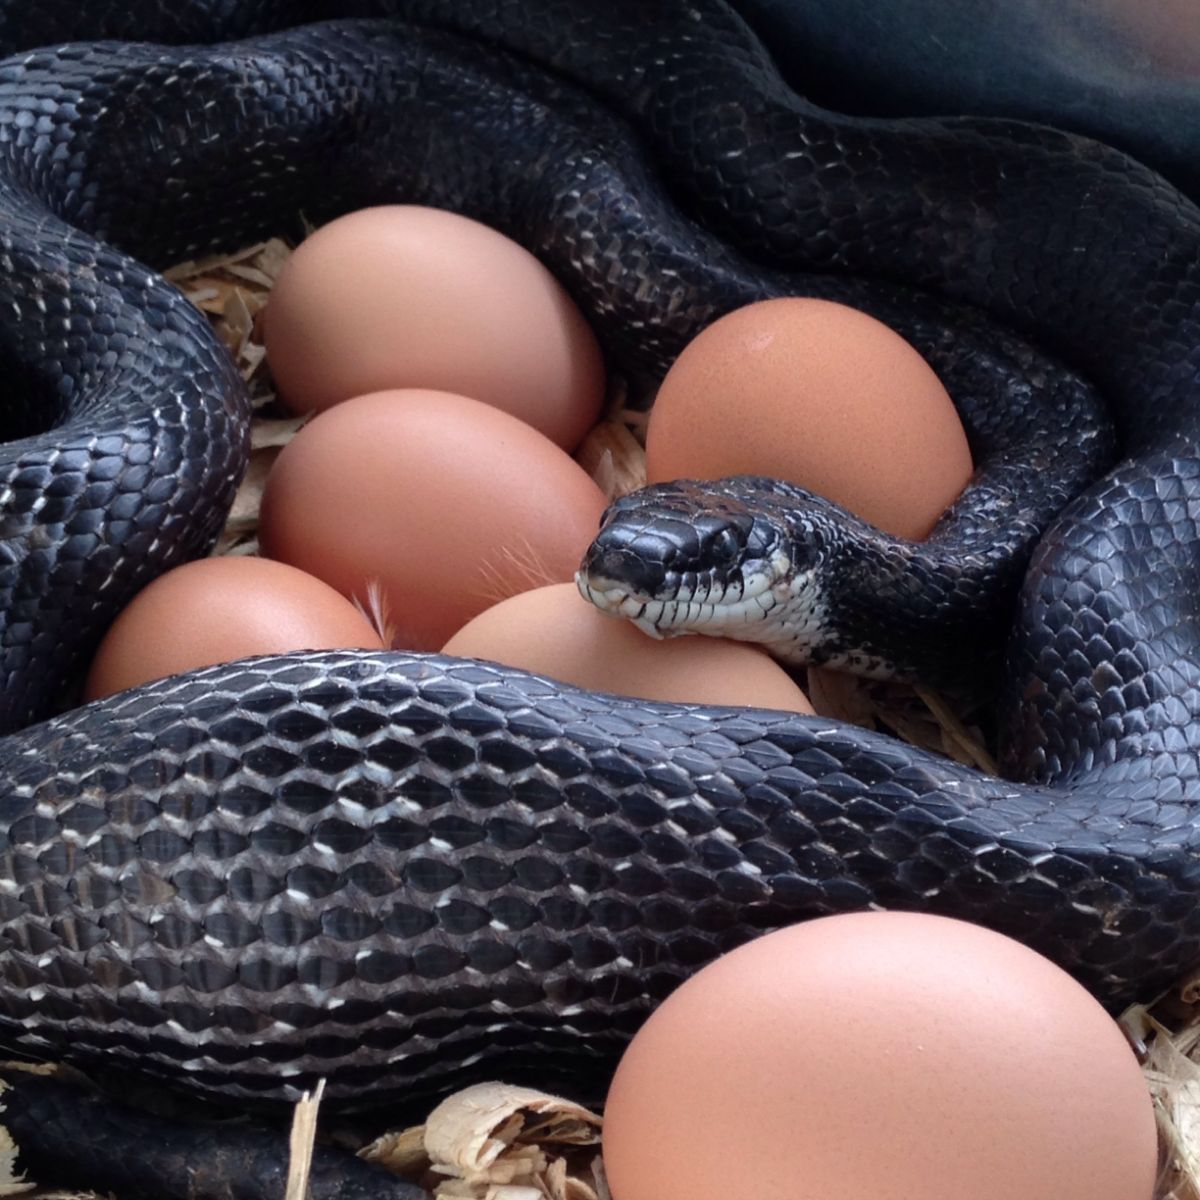 Black rat snake near chicken eggs.